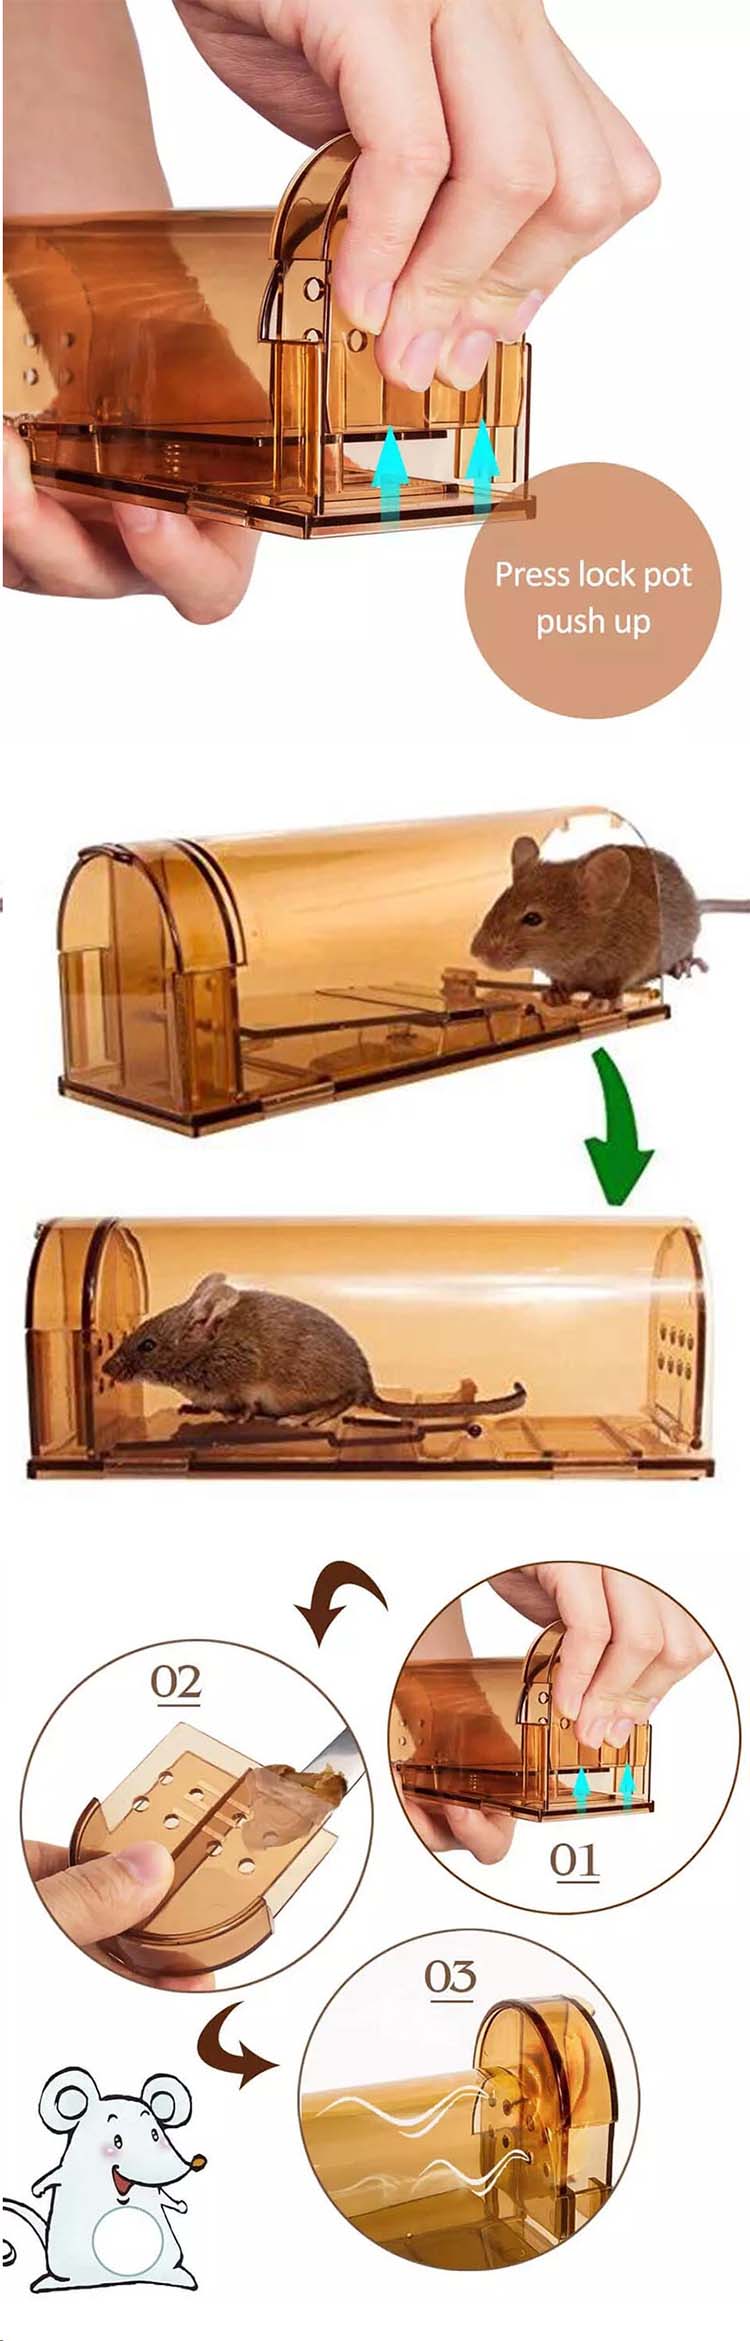 2019 Amazon Inopisa Tengesa Yemba Plastic Humane Rarama Bata Smart Mouse Rat Trap Mouse Trap Cage03